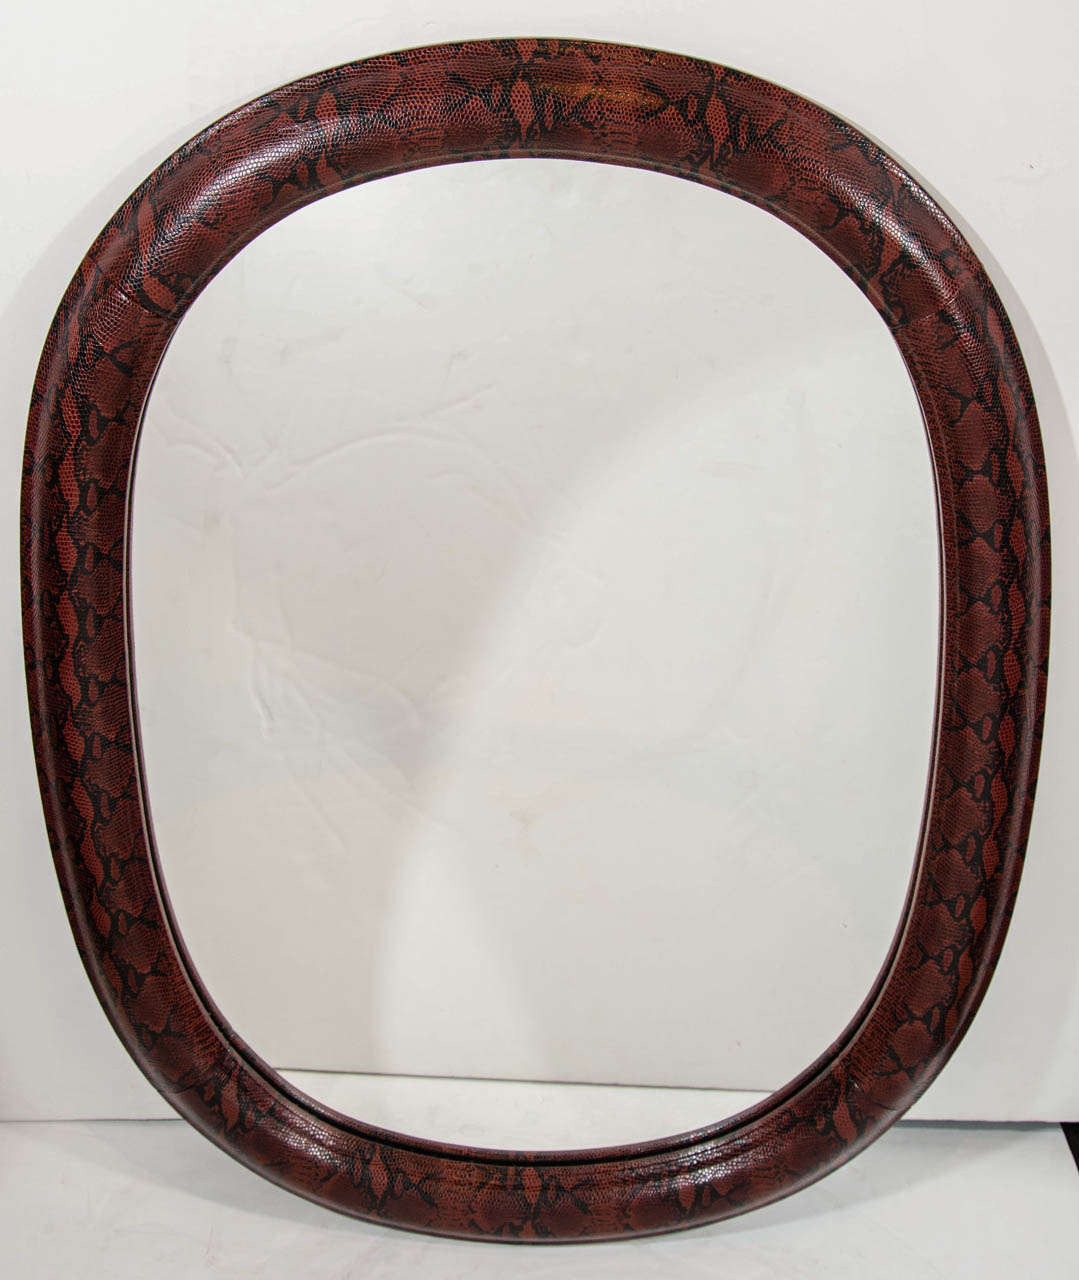 American Mid-Century Modern Red Snakeskin Mirror in Embossed Leather